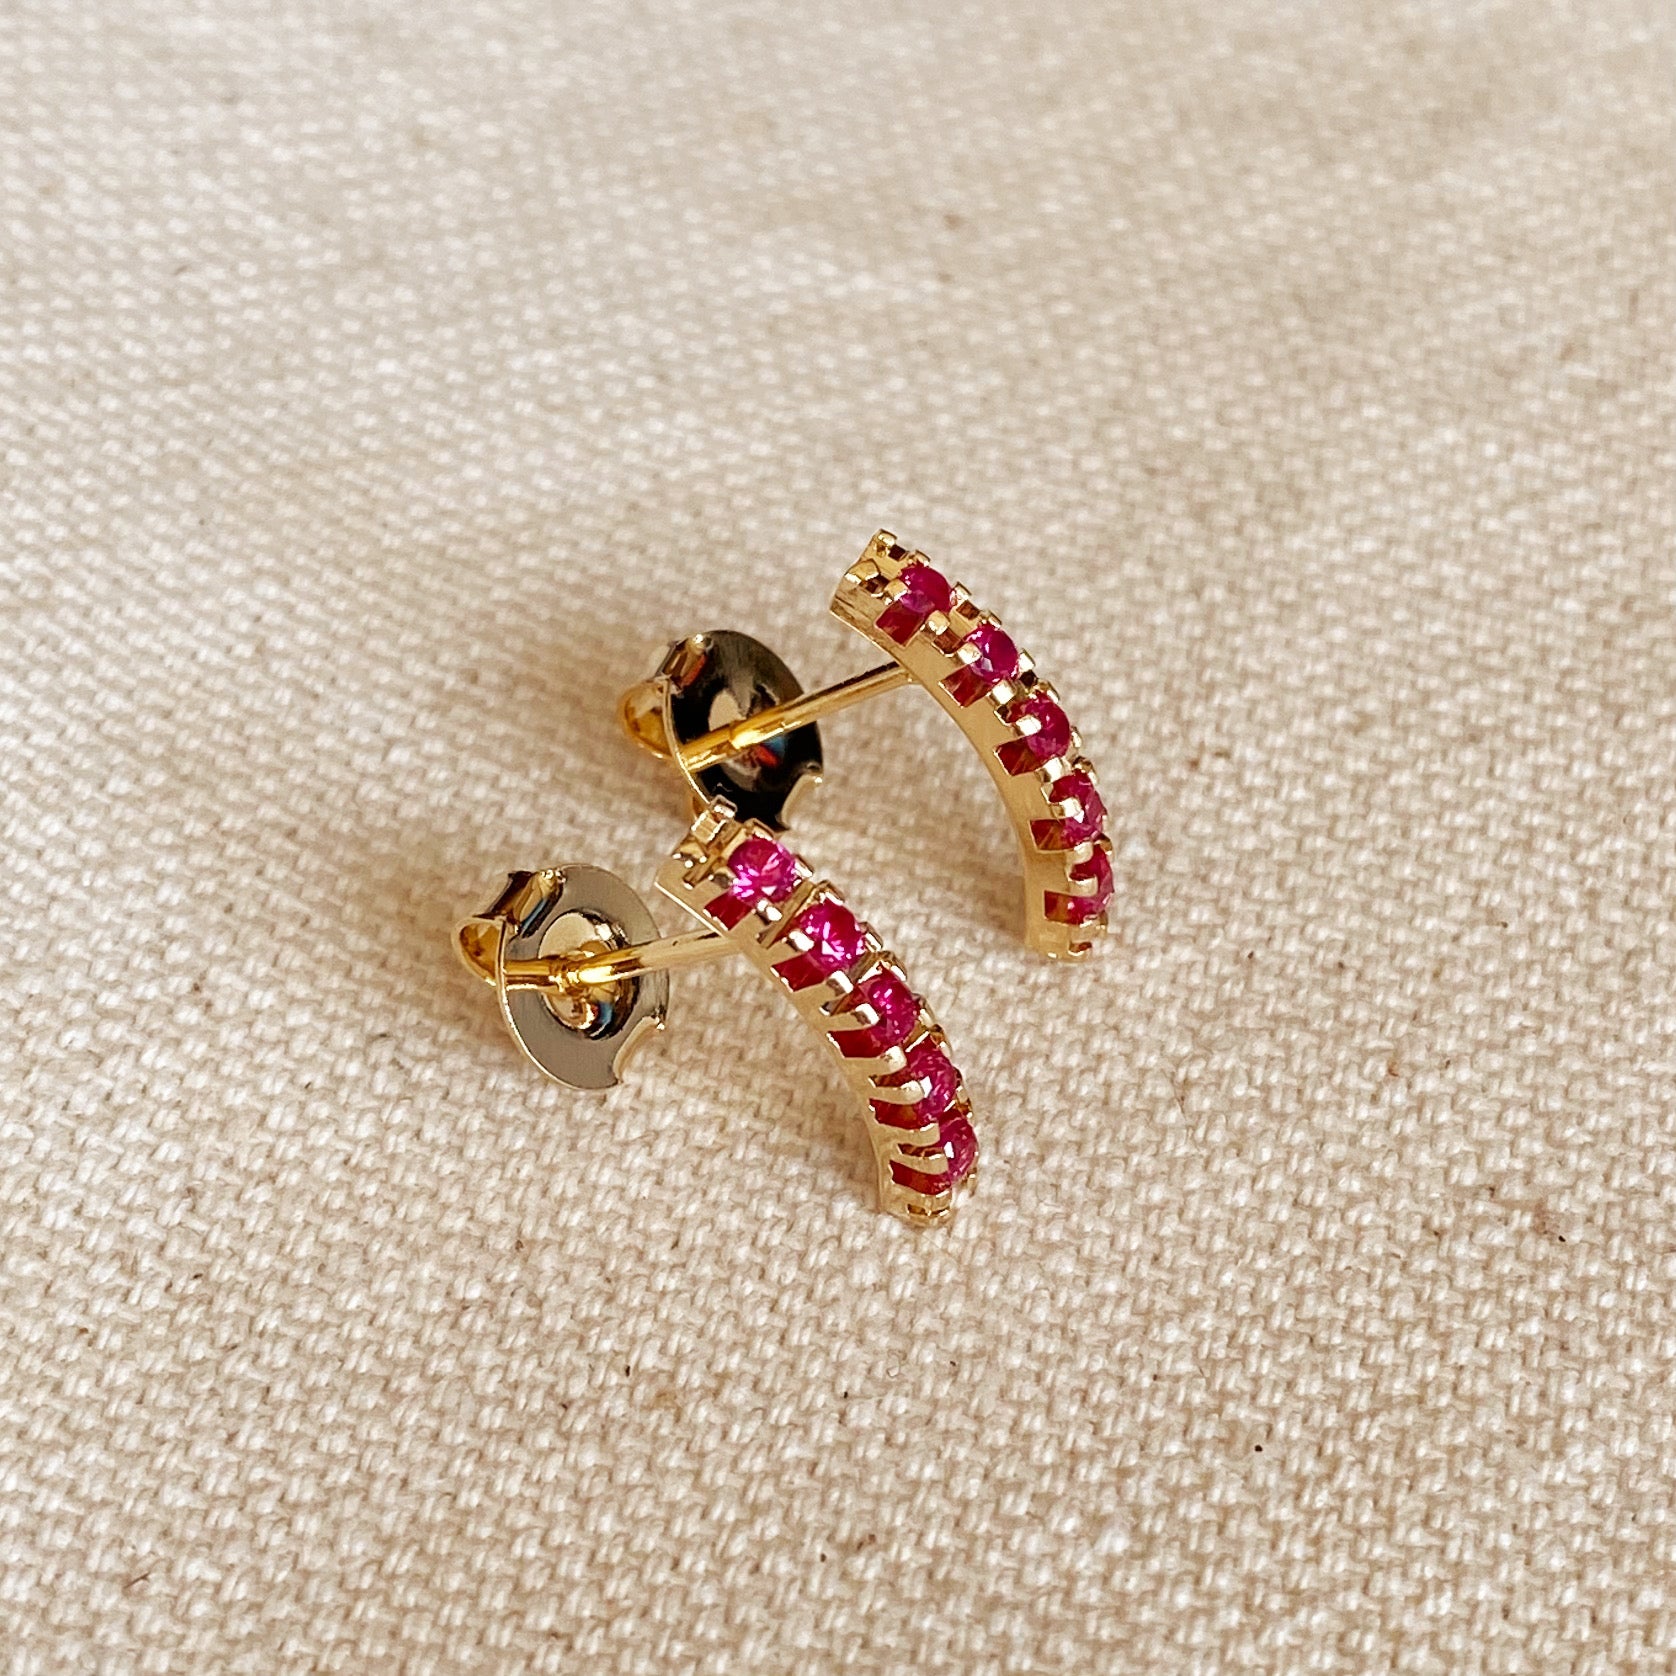 GoldFi 18k Gold Filled Curved Bar Fuchsia Crystal Stud Earrings